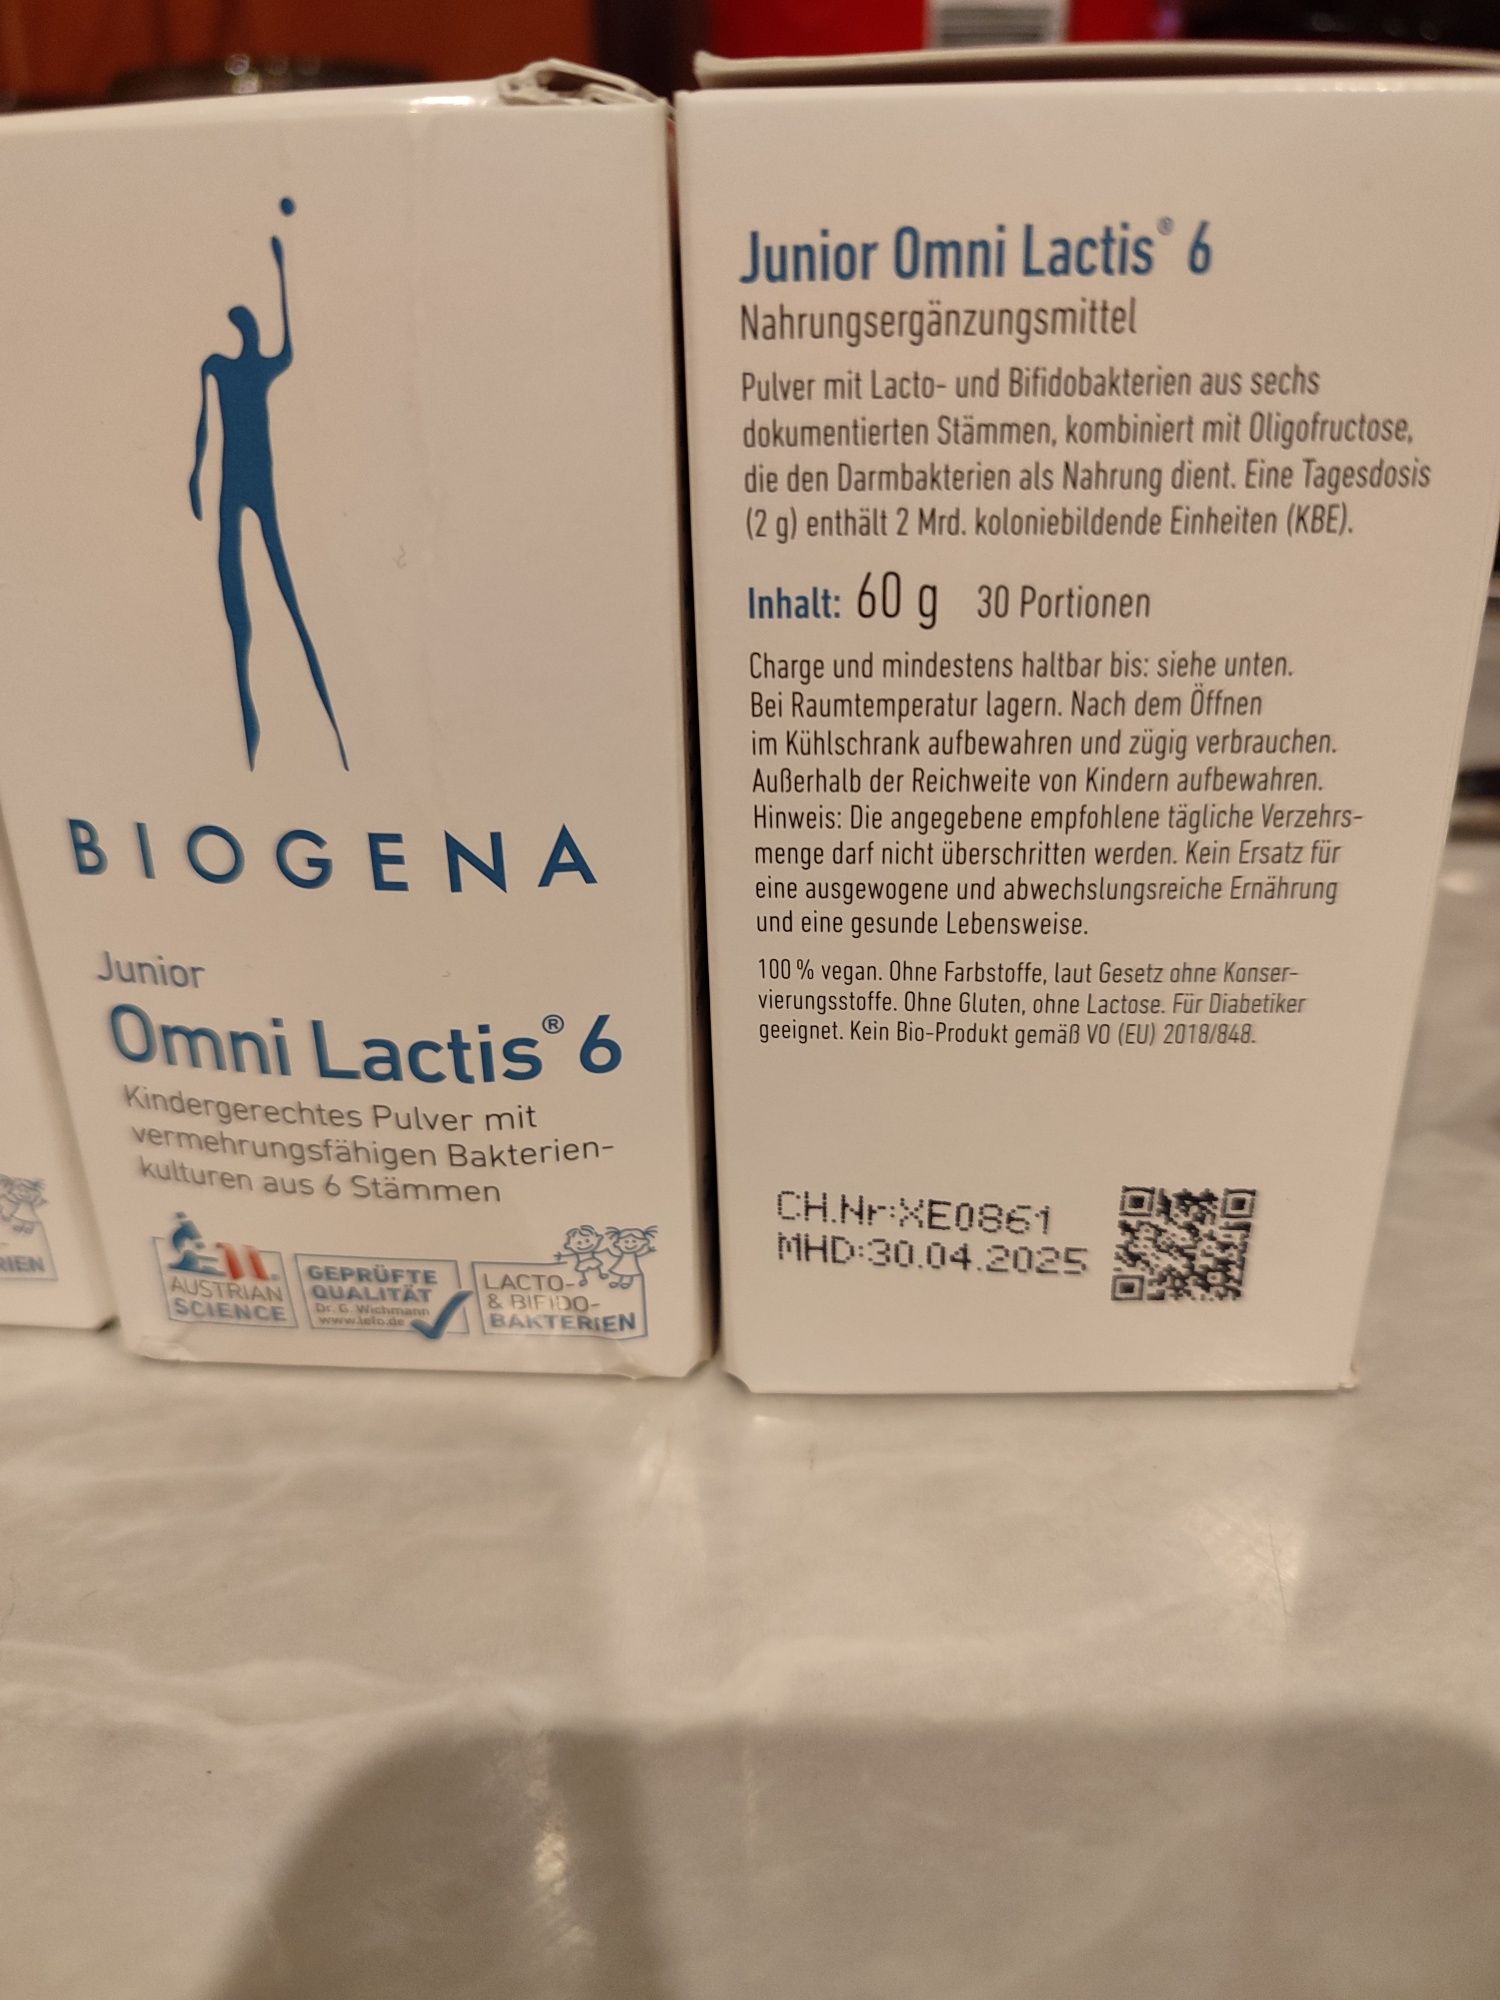 Vand Omni Lactis 6 Biogena